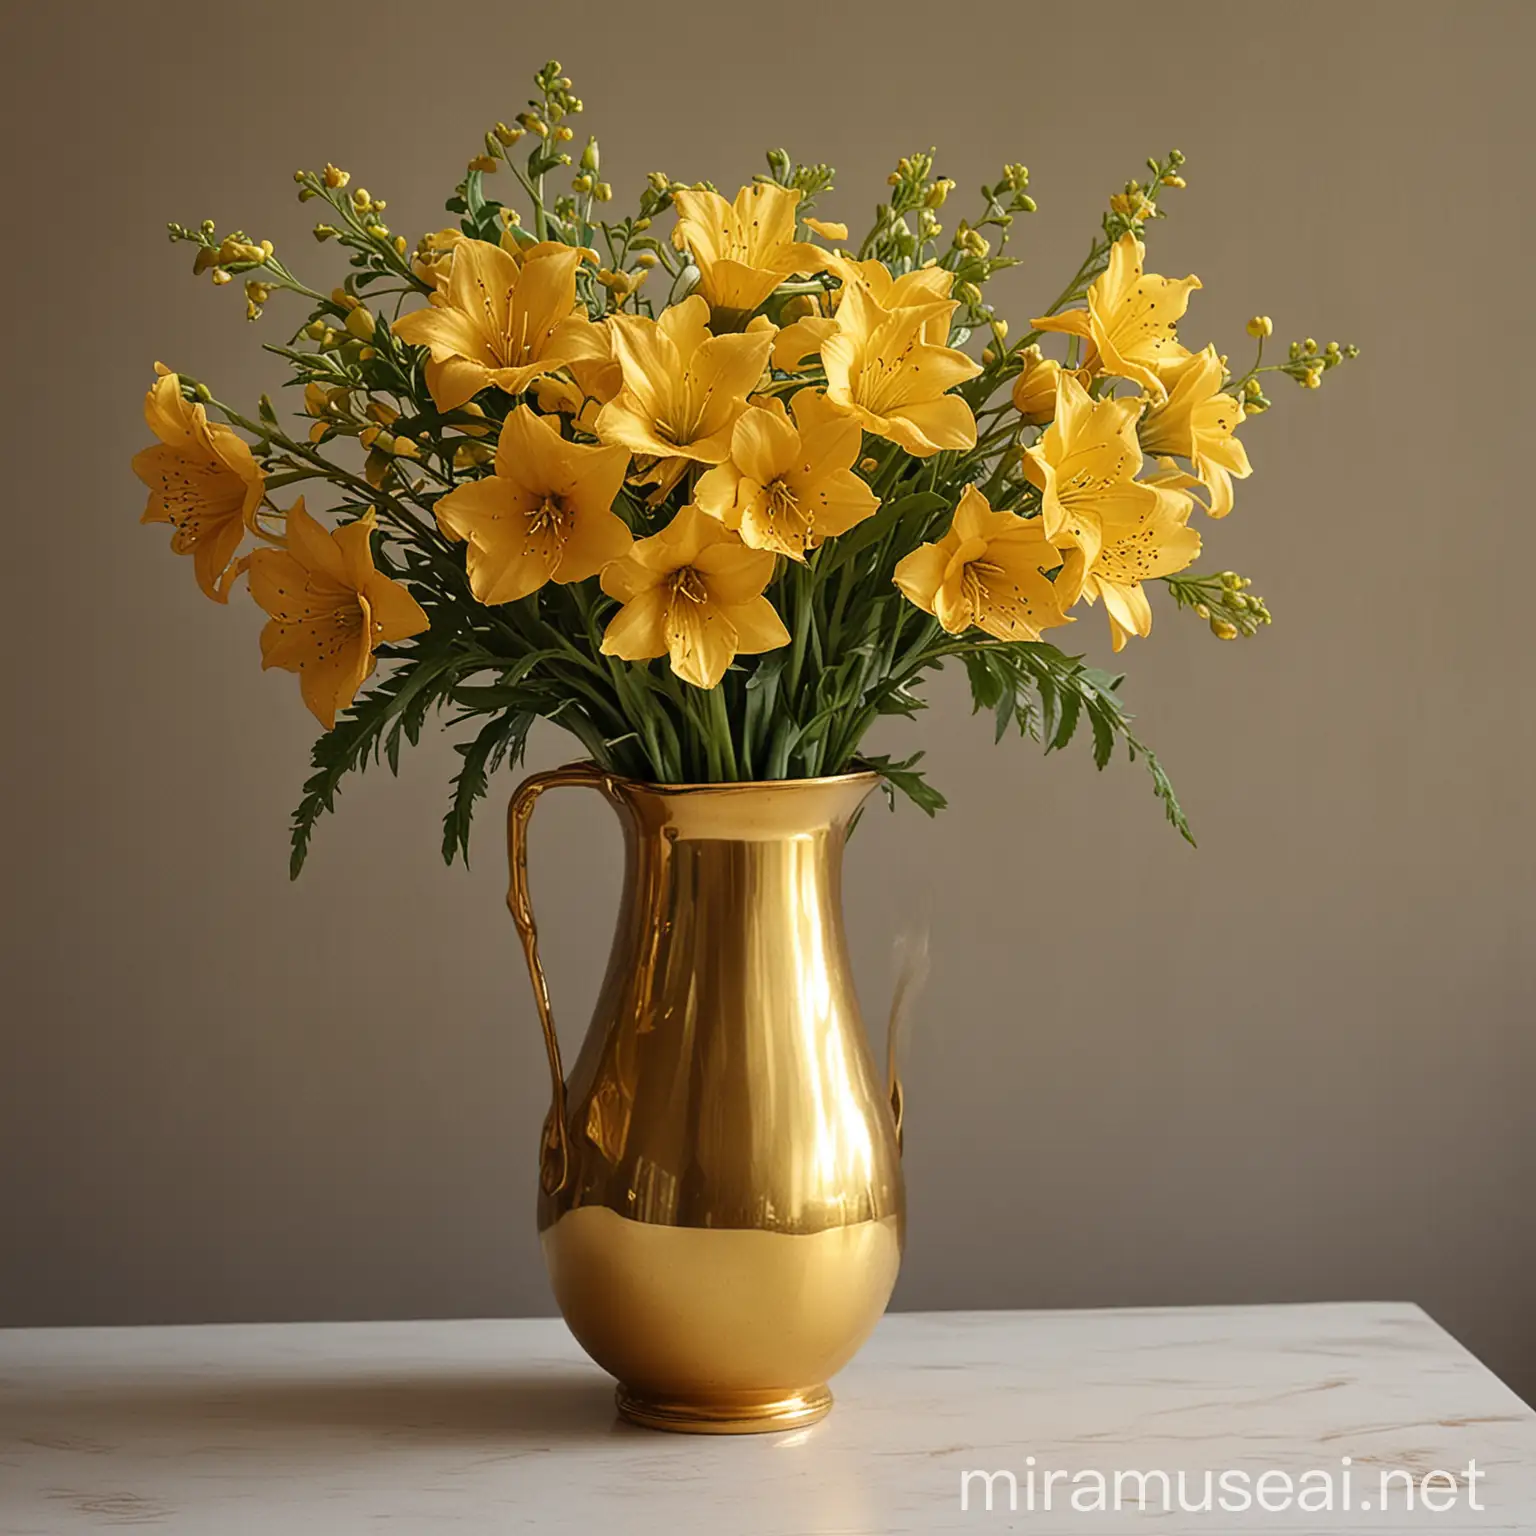 Golden Vase with Elegant Flowers on Dark Background